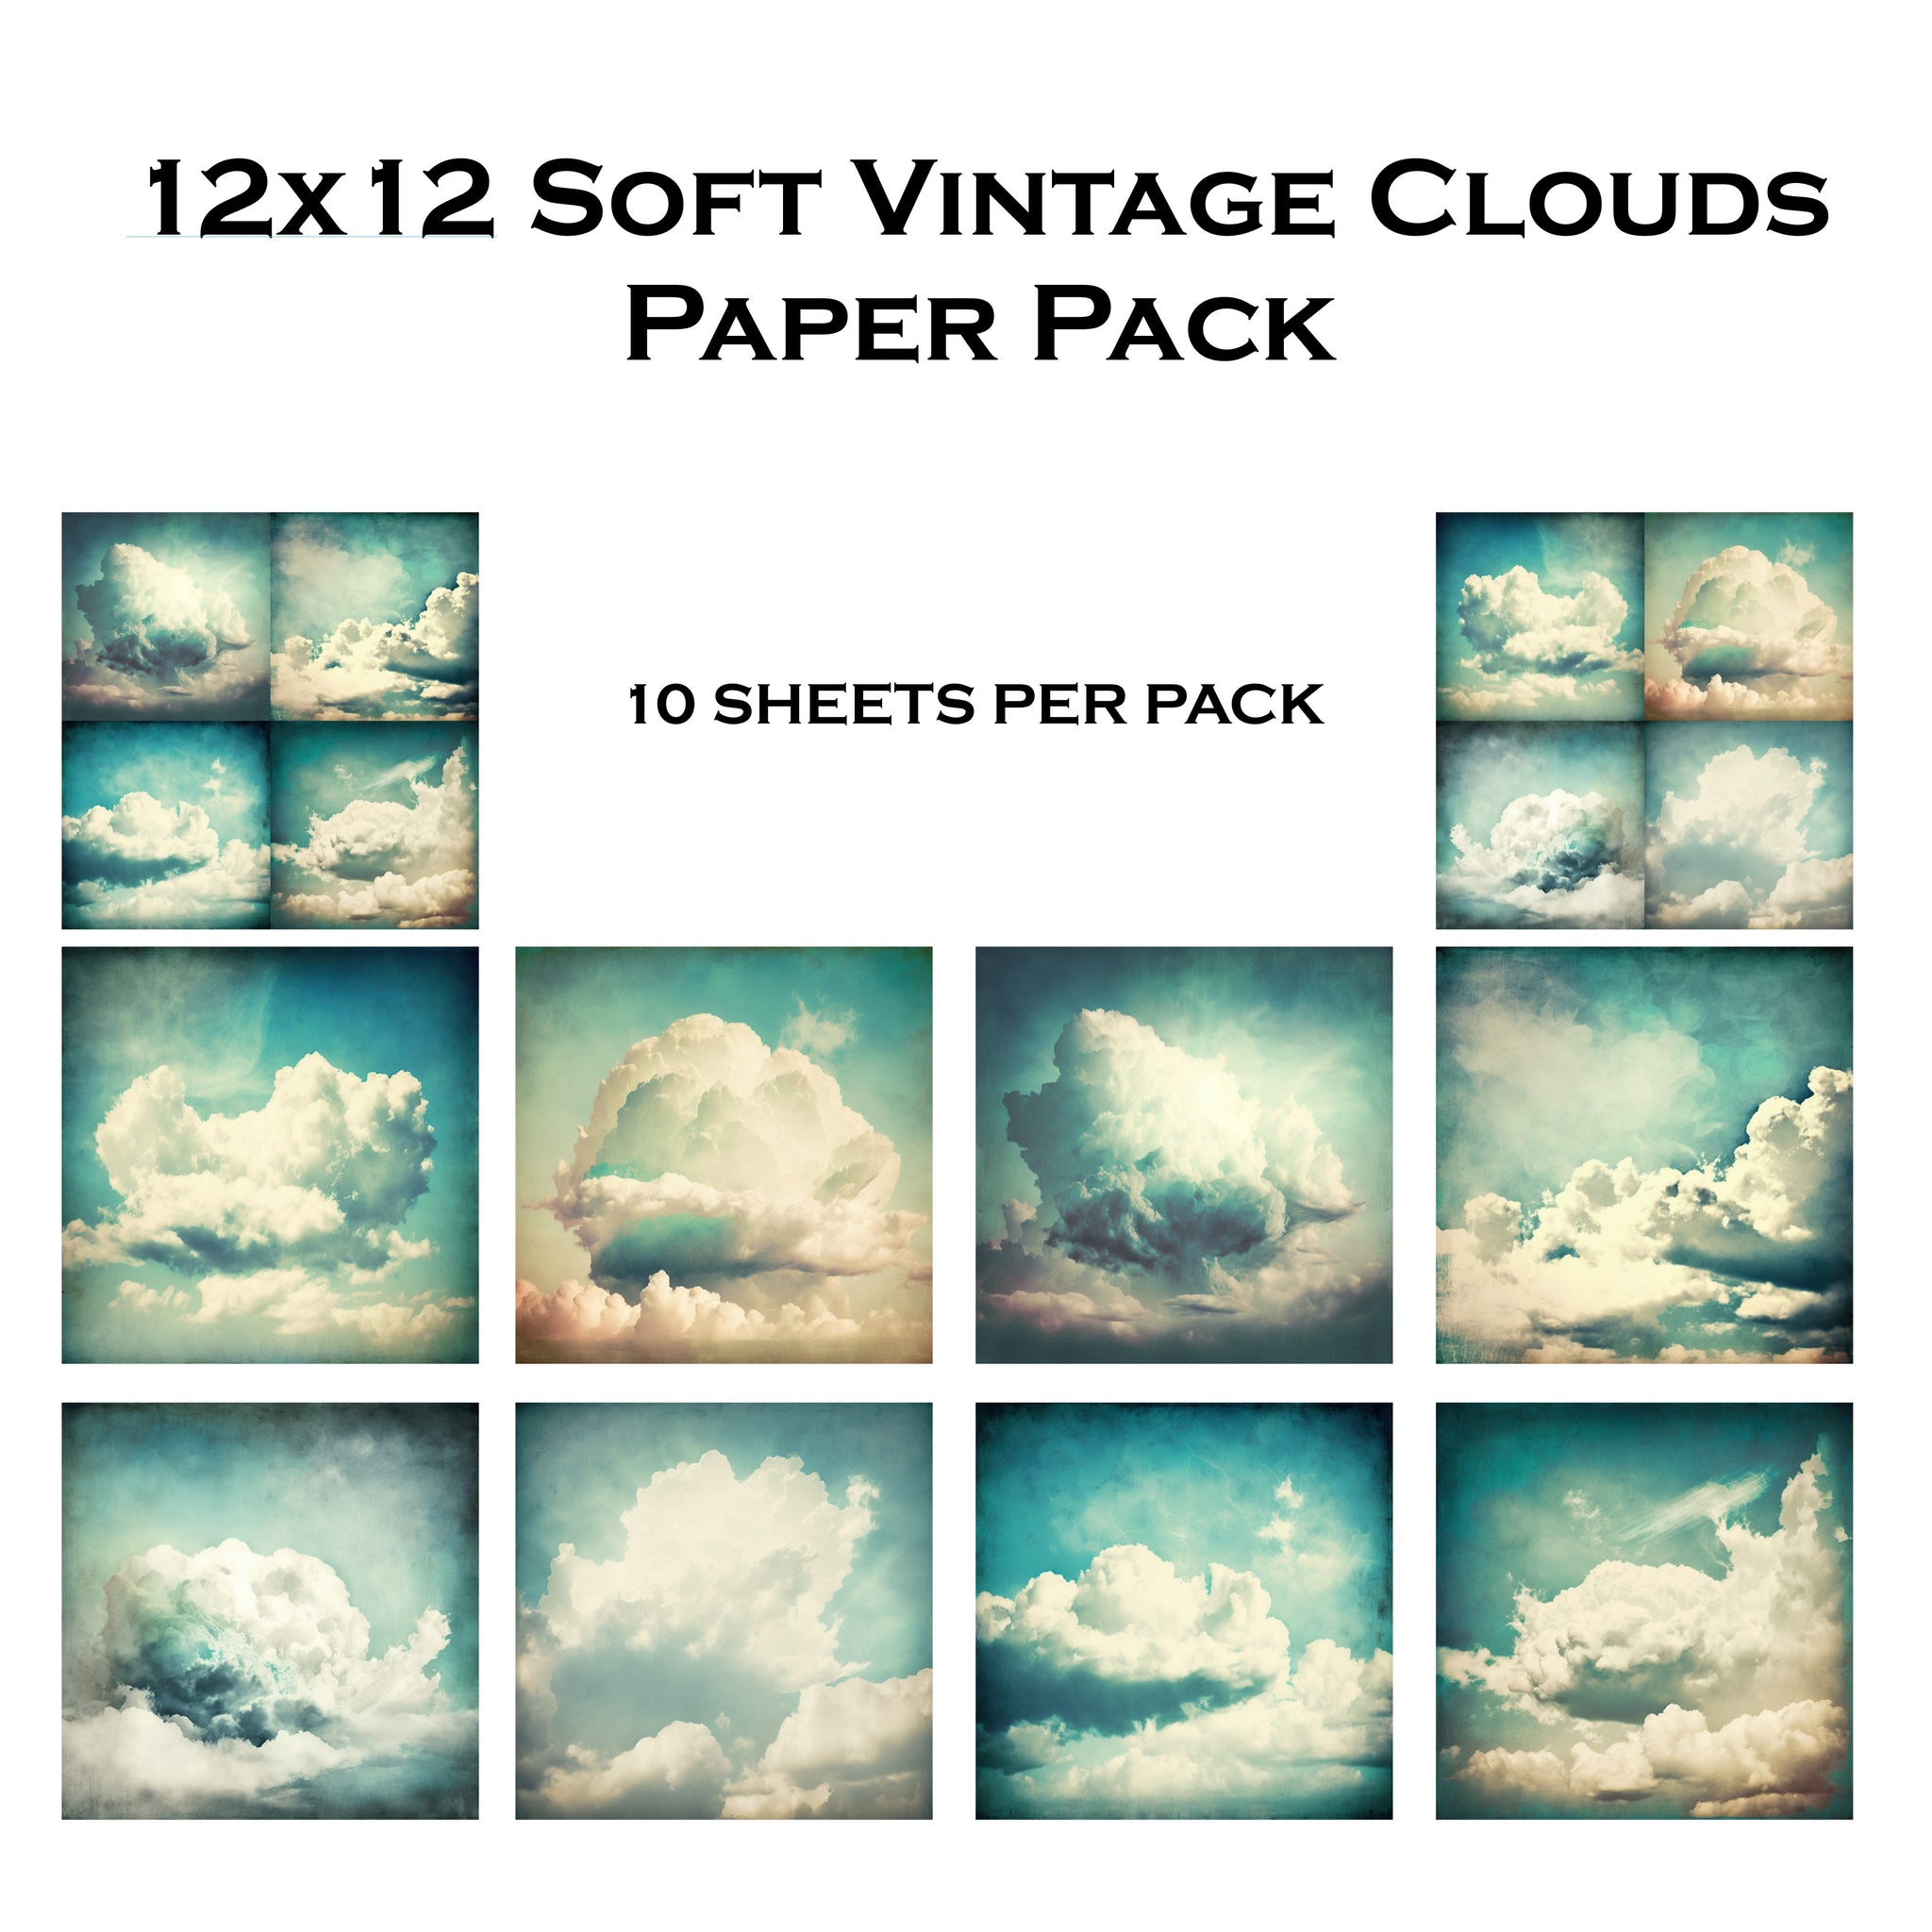 Soft Vintage Clouds 12x12 Paper Pack